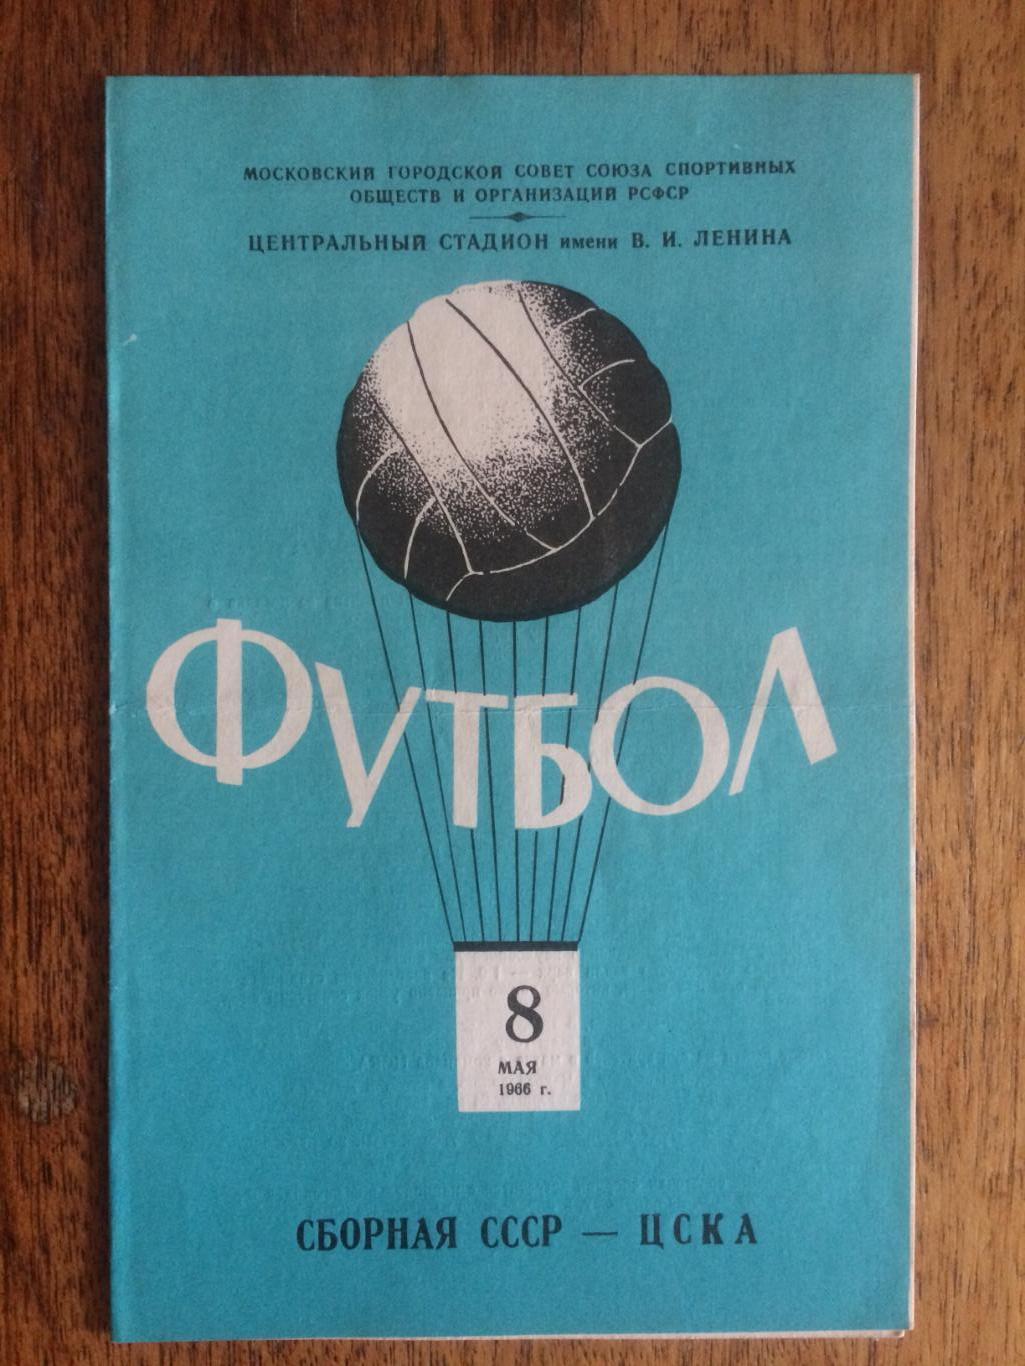 Футбол.СССР - ЦСКА 08.05.1966